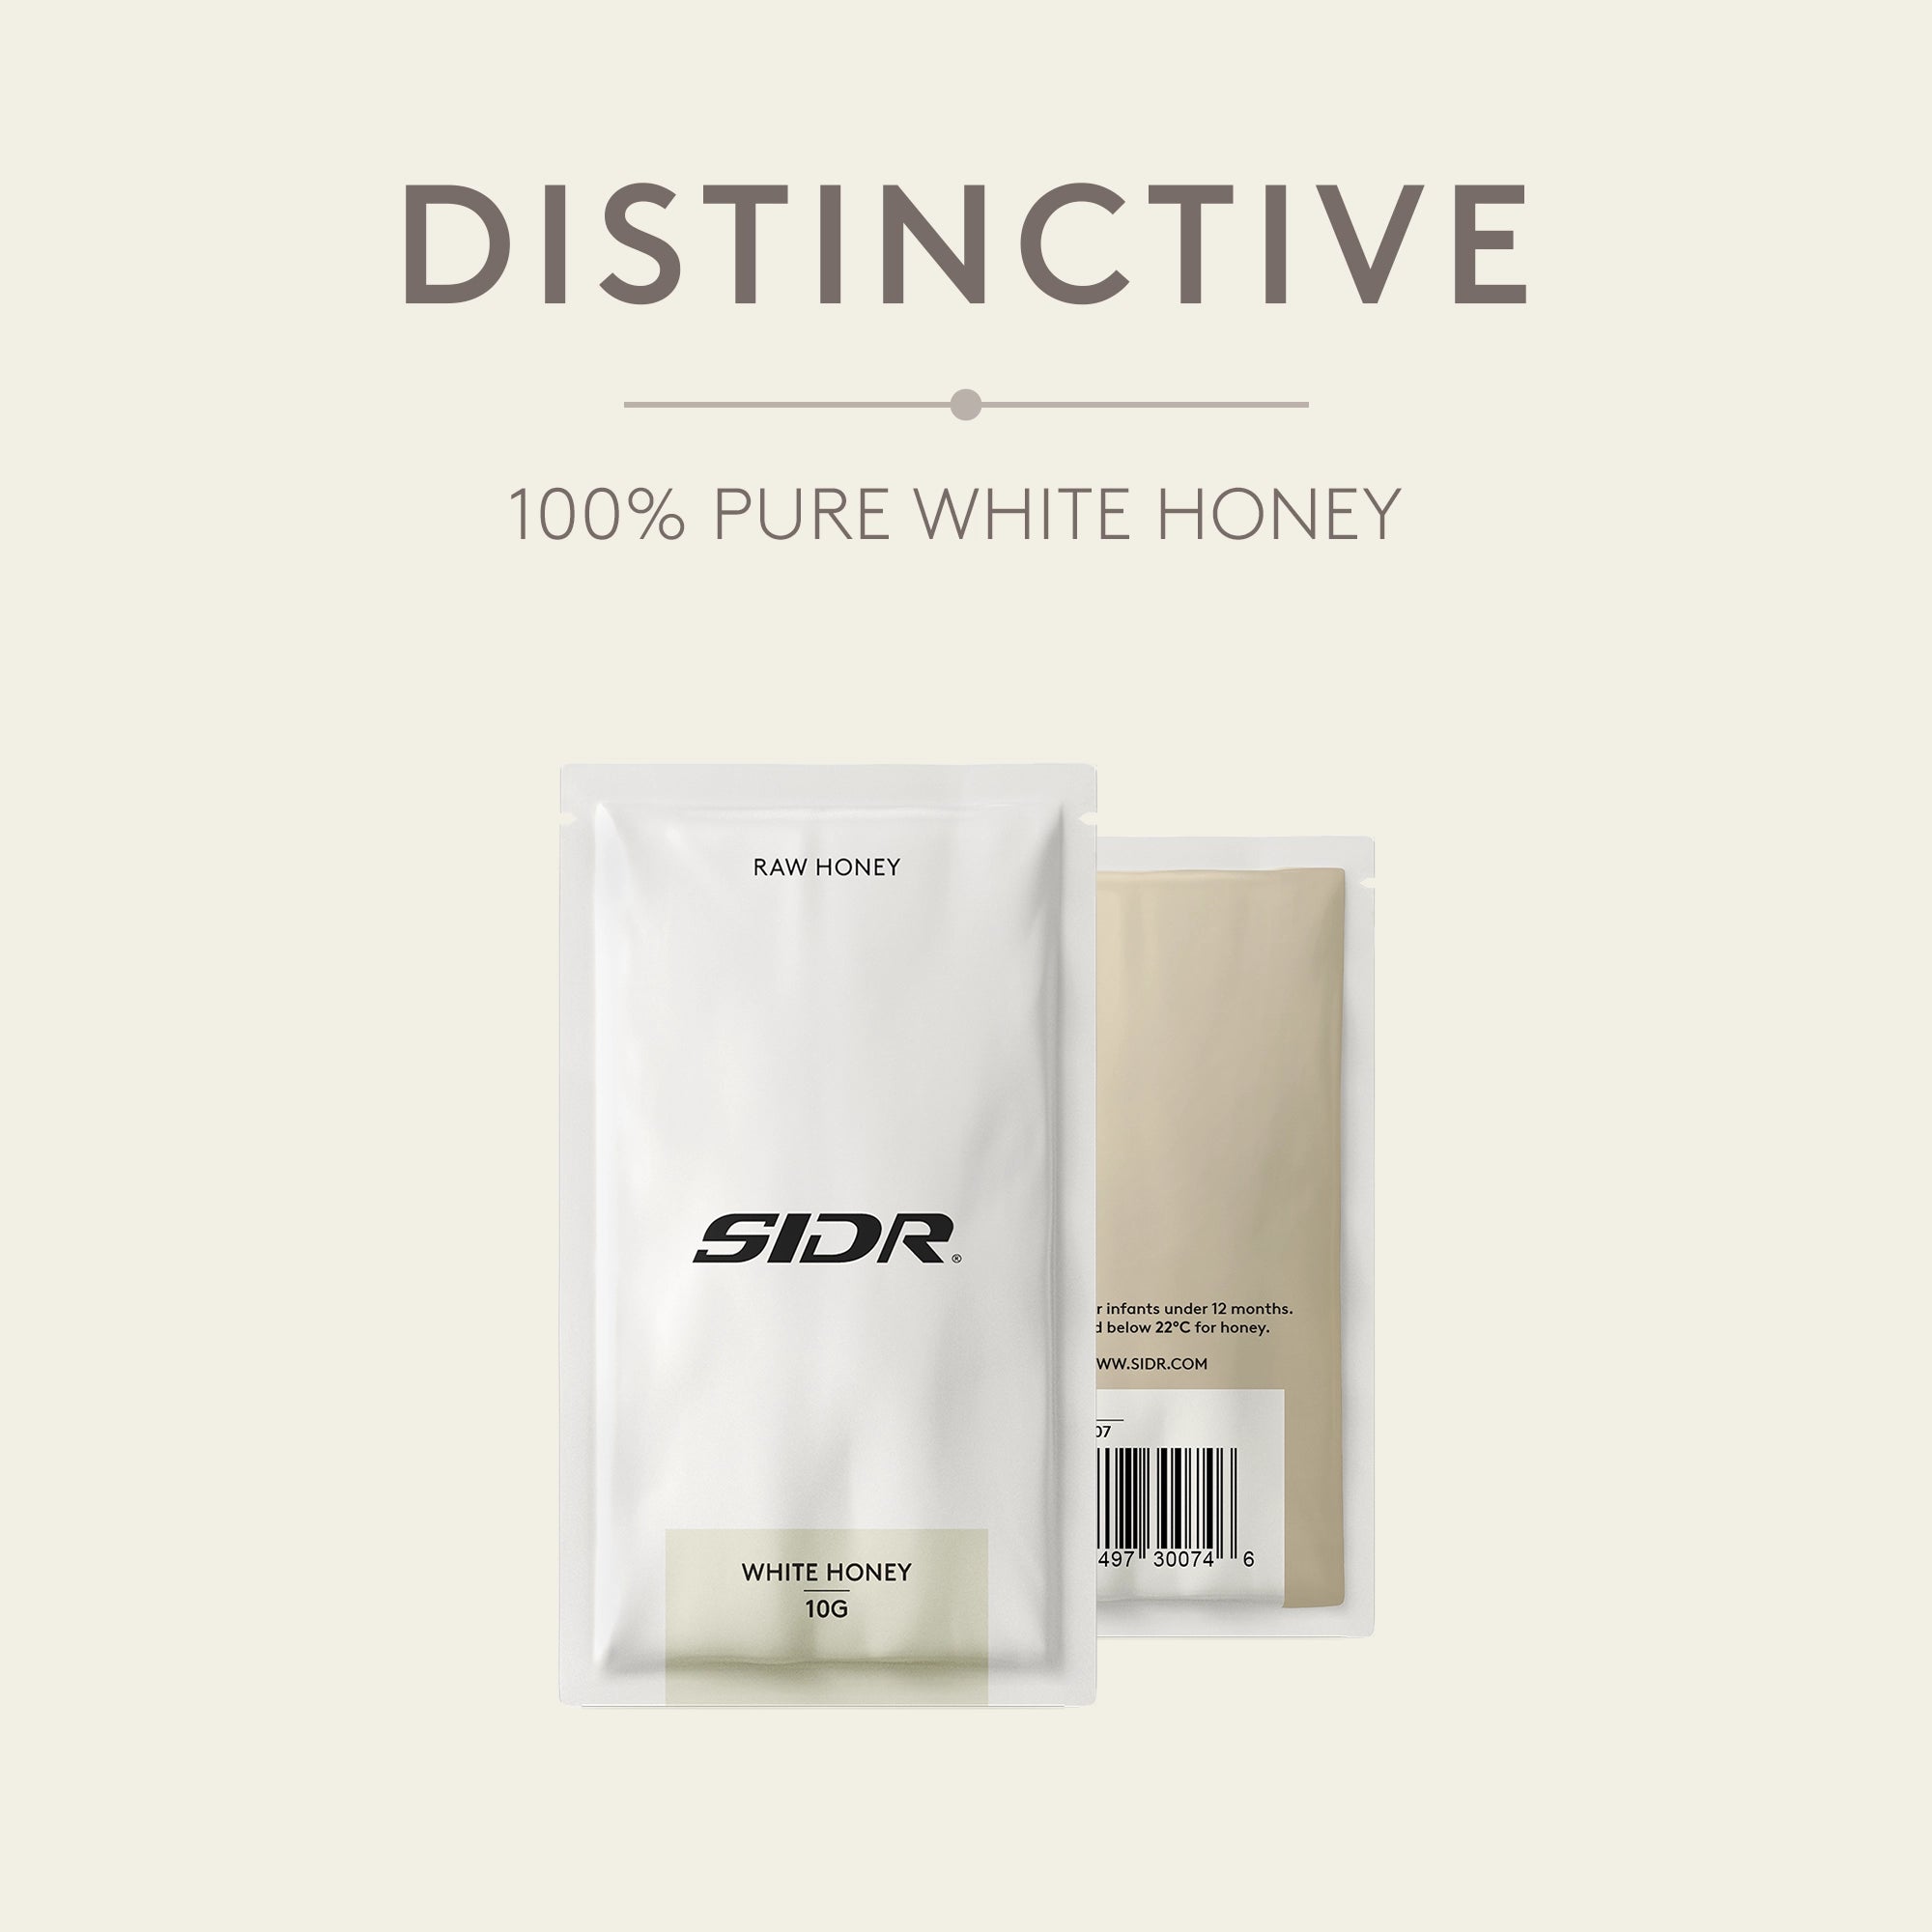 white honey packet distinctive